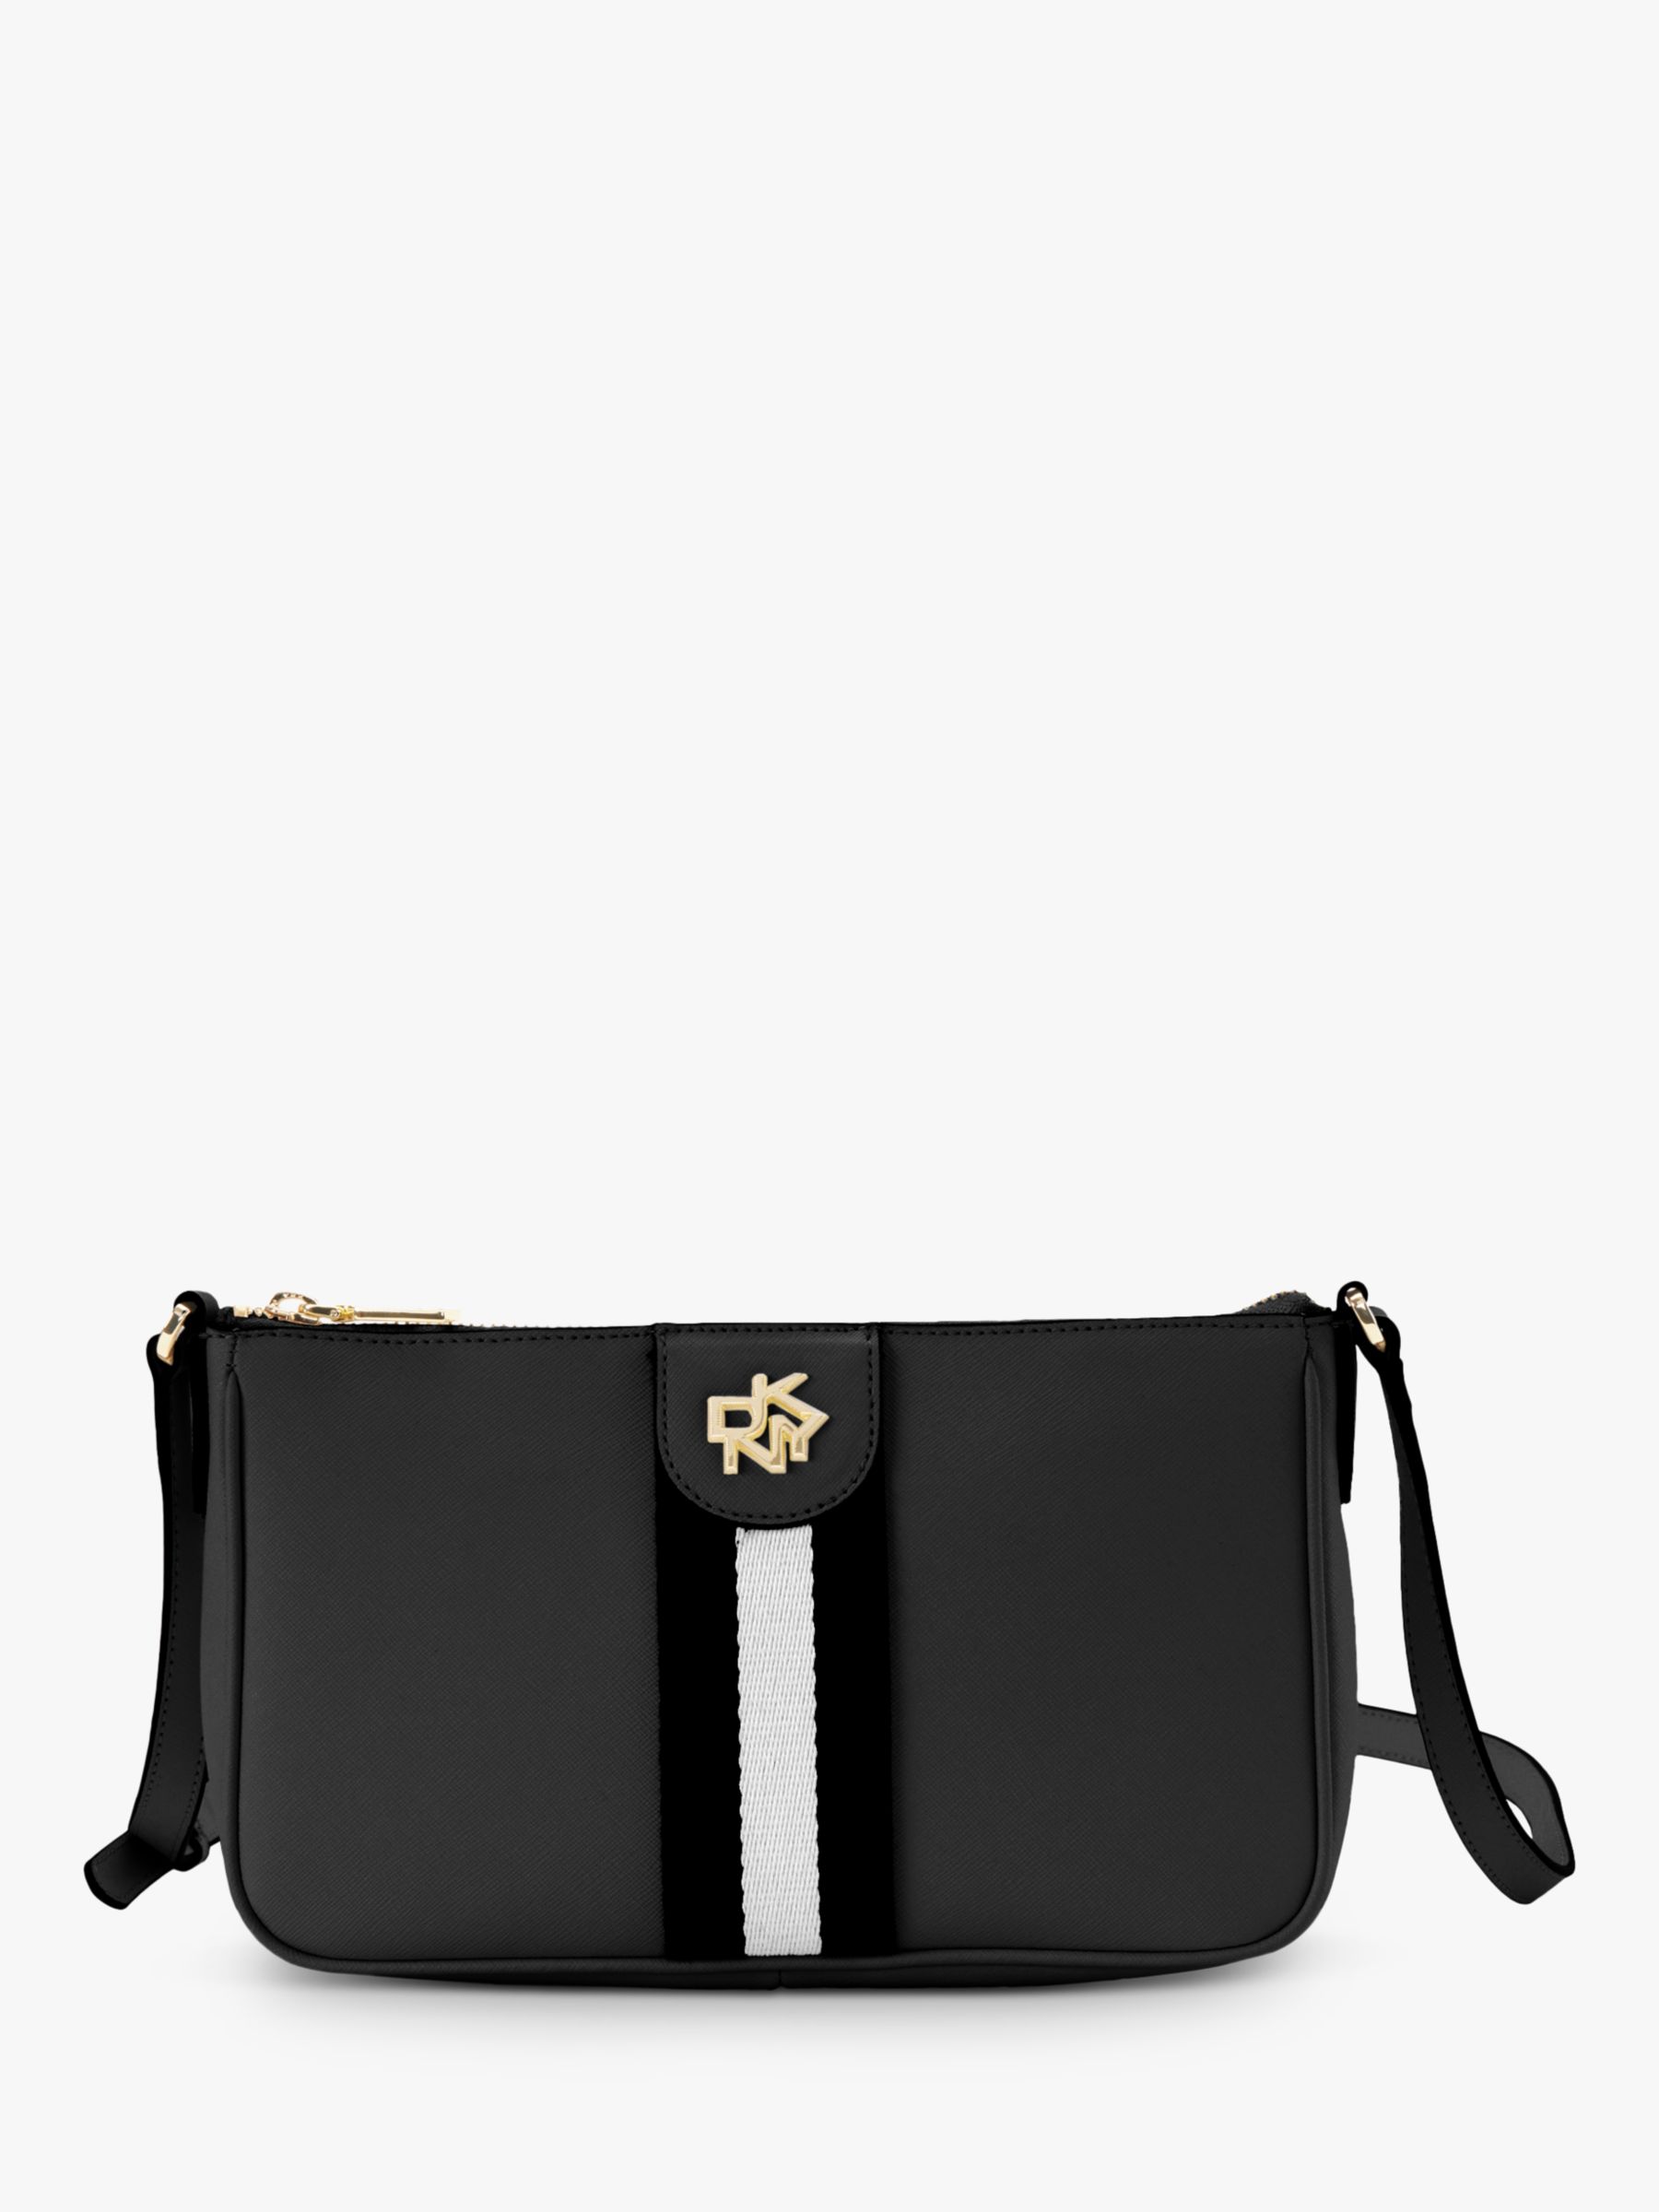 DKNY Carol Stripe Webbing Cross Body Bag, Black/Gold